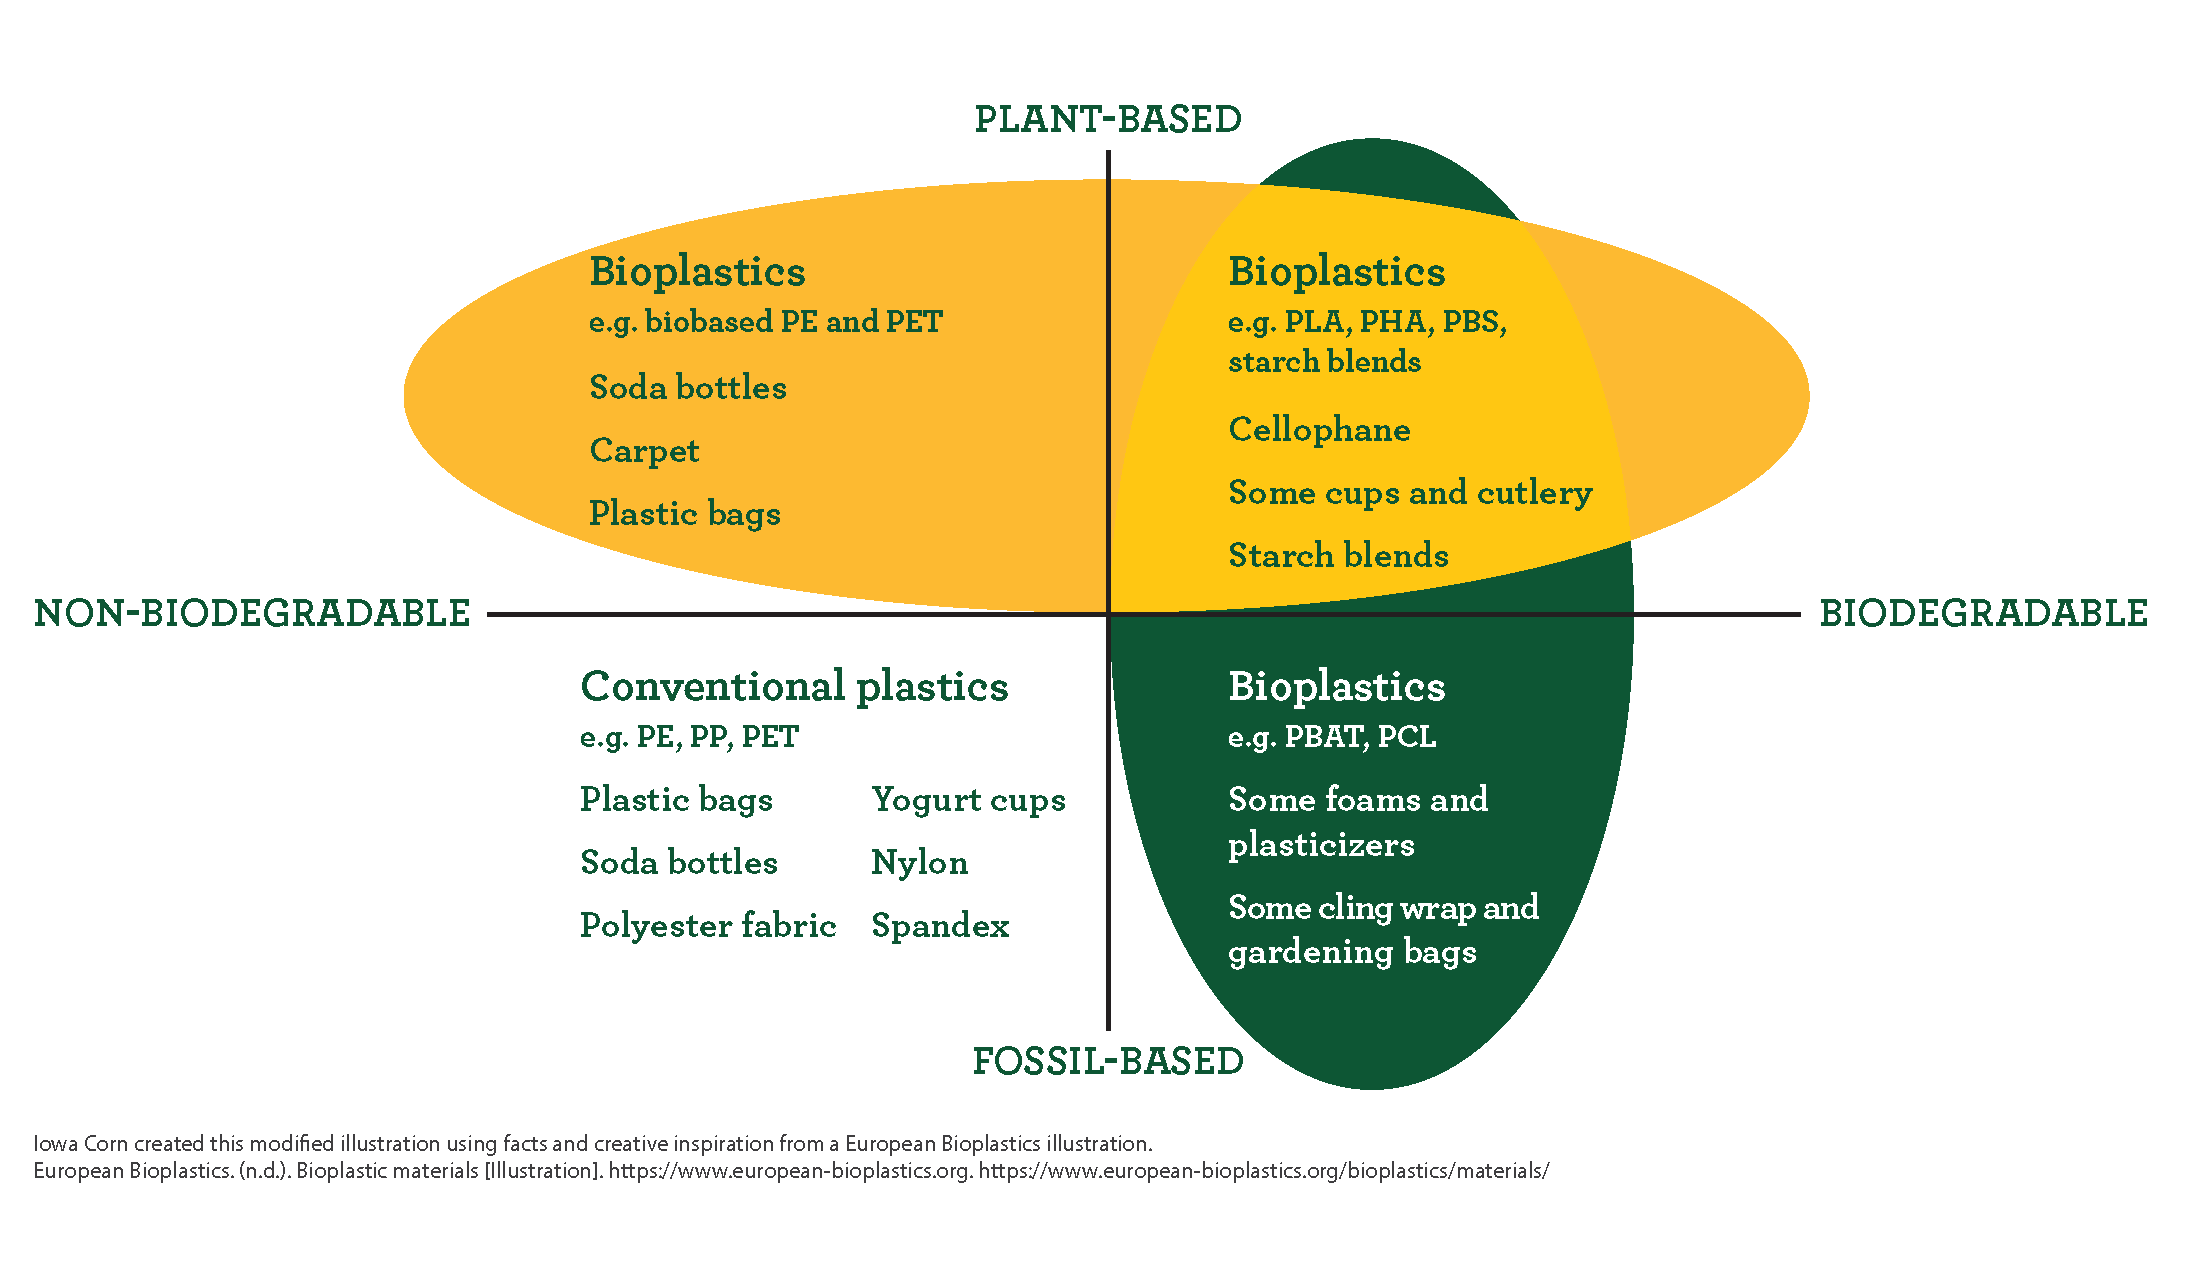 A graphic depicting different types of bioplastics